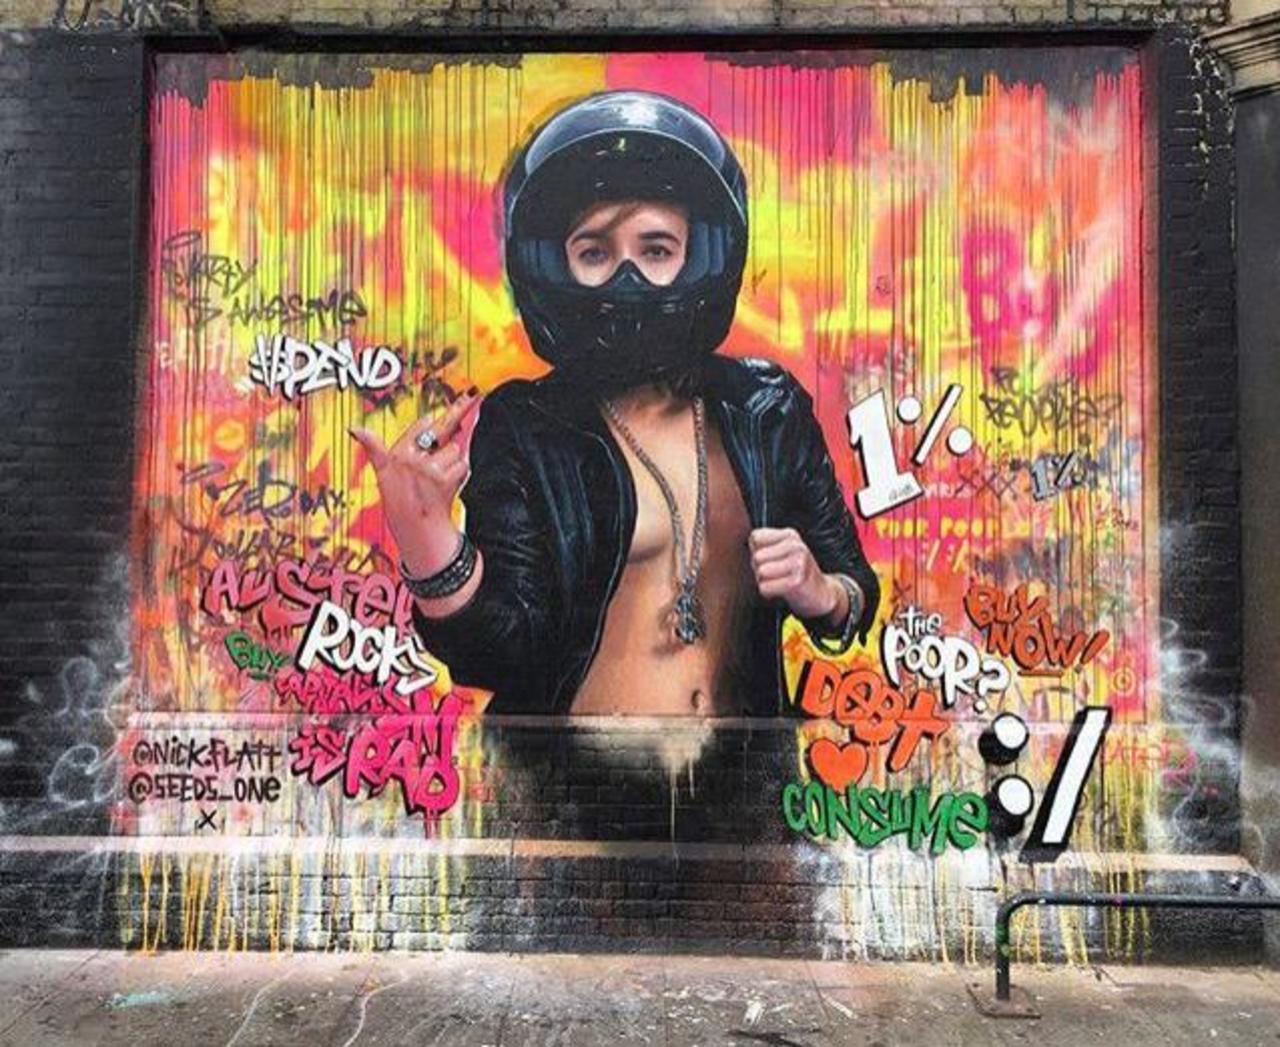 New Street Art collab by Nick Flatt &  Seeds One in London 

#art #graffiti #mural #streetart http://t.co/XXfz6lh6PJ